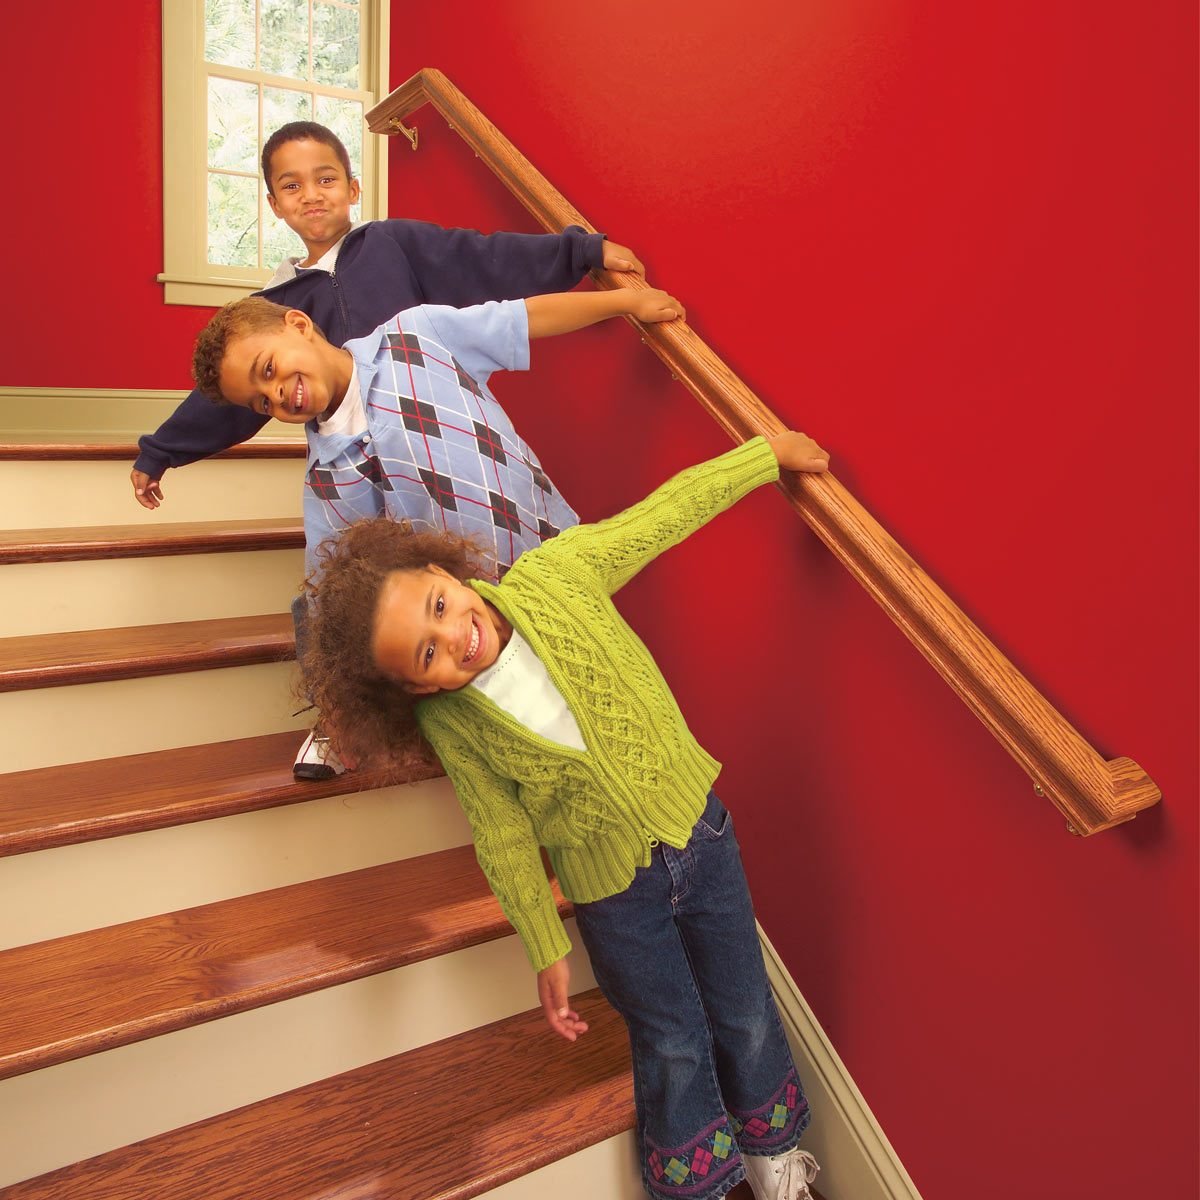 Install A New Stair Handrail Diy